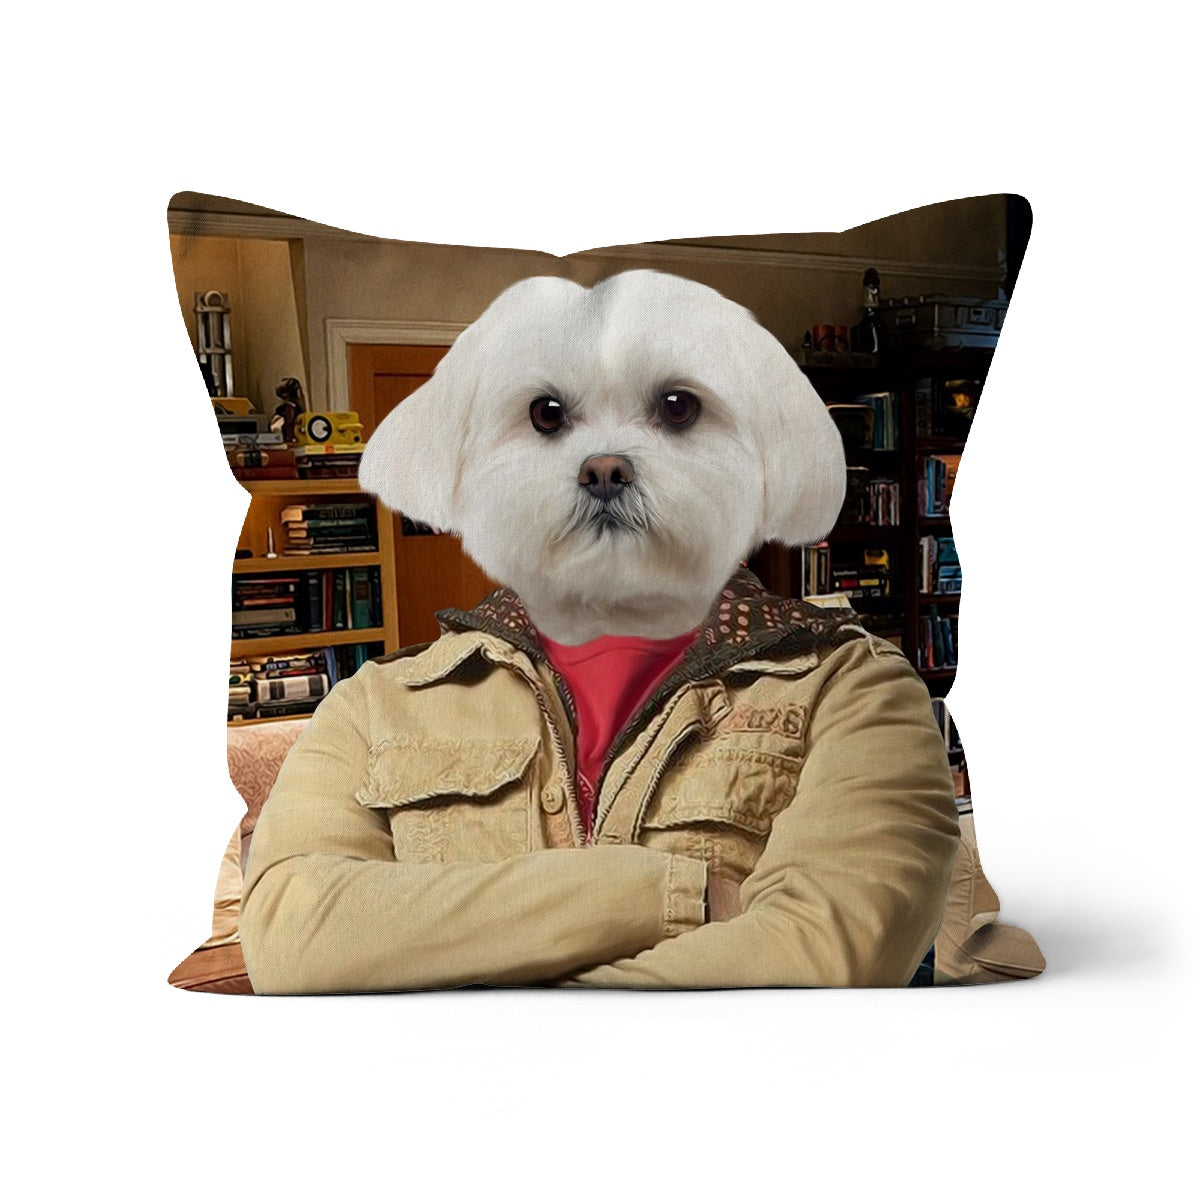 Paw & Glory, pawandglory, custom pet pillows, customized throw pillows, dog on cushion, custom pet portrait pillow, custom printed pillows, cat pillow, Pet Portrait cushion,